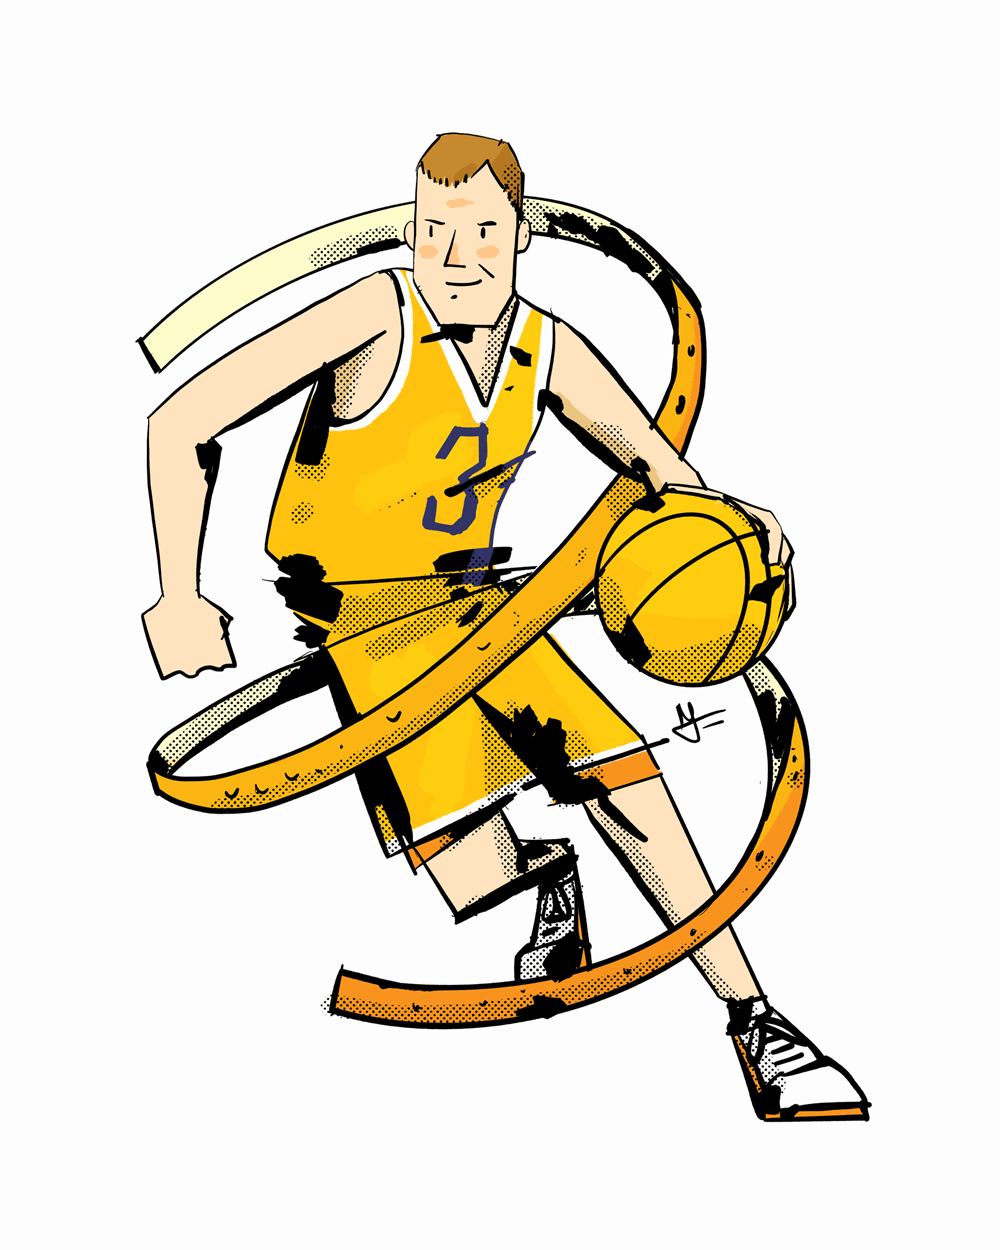 Gerry Mcnamara dribbling a basketball.